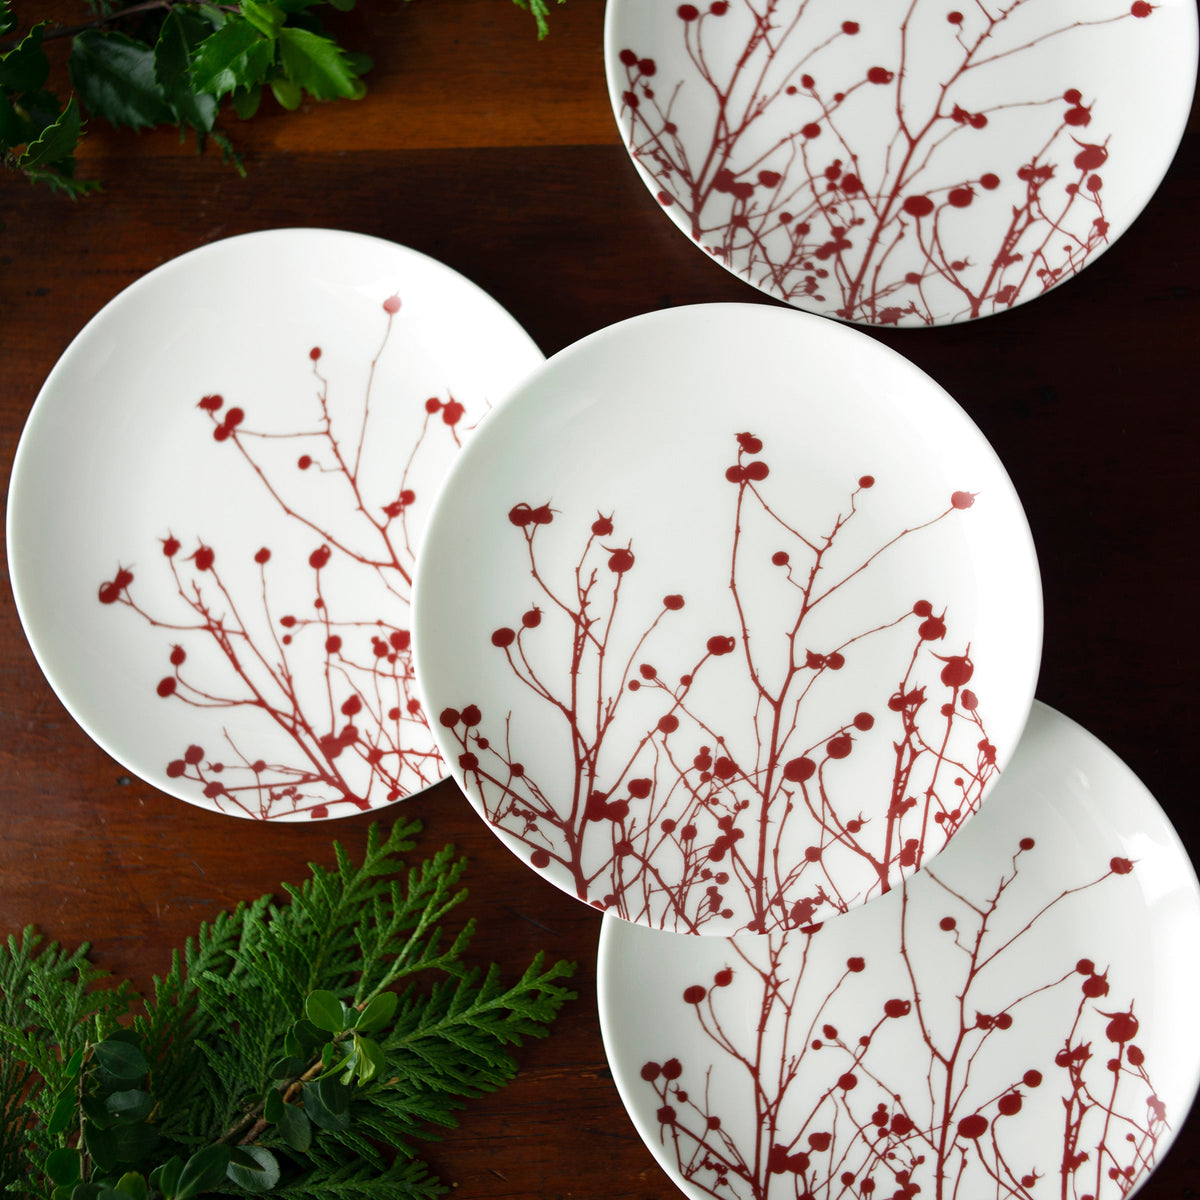 Four Winterberries Canapé Plates with porcelain canapé topped with red winter berries, made by Caskata Artisanal Home.